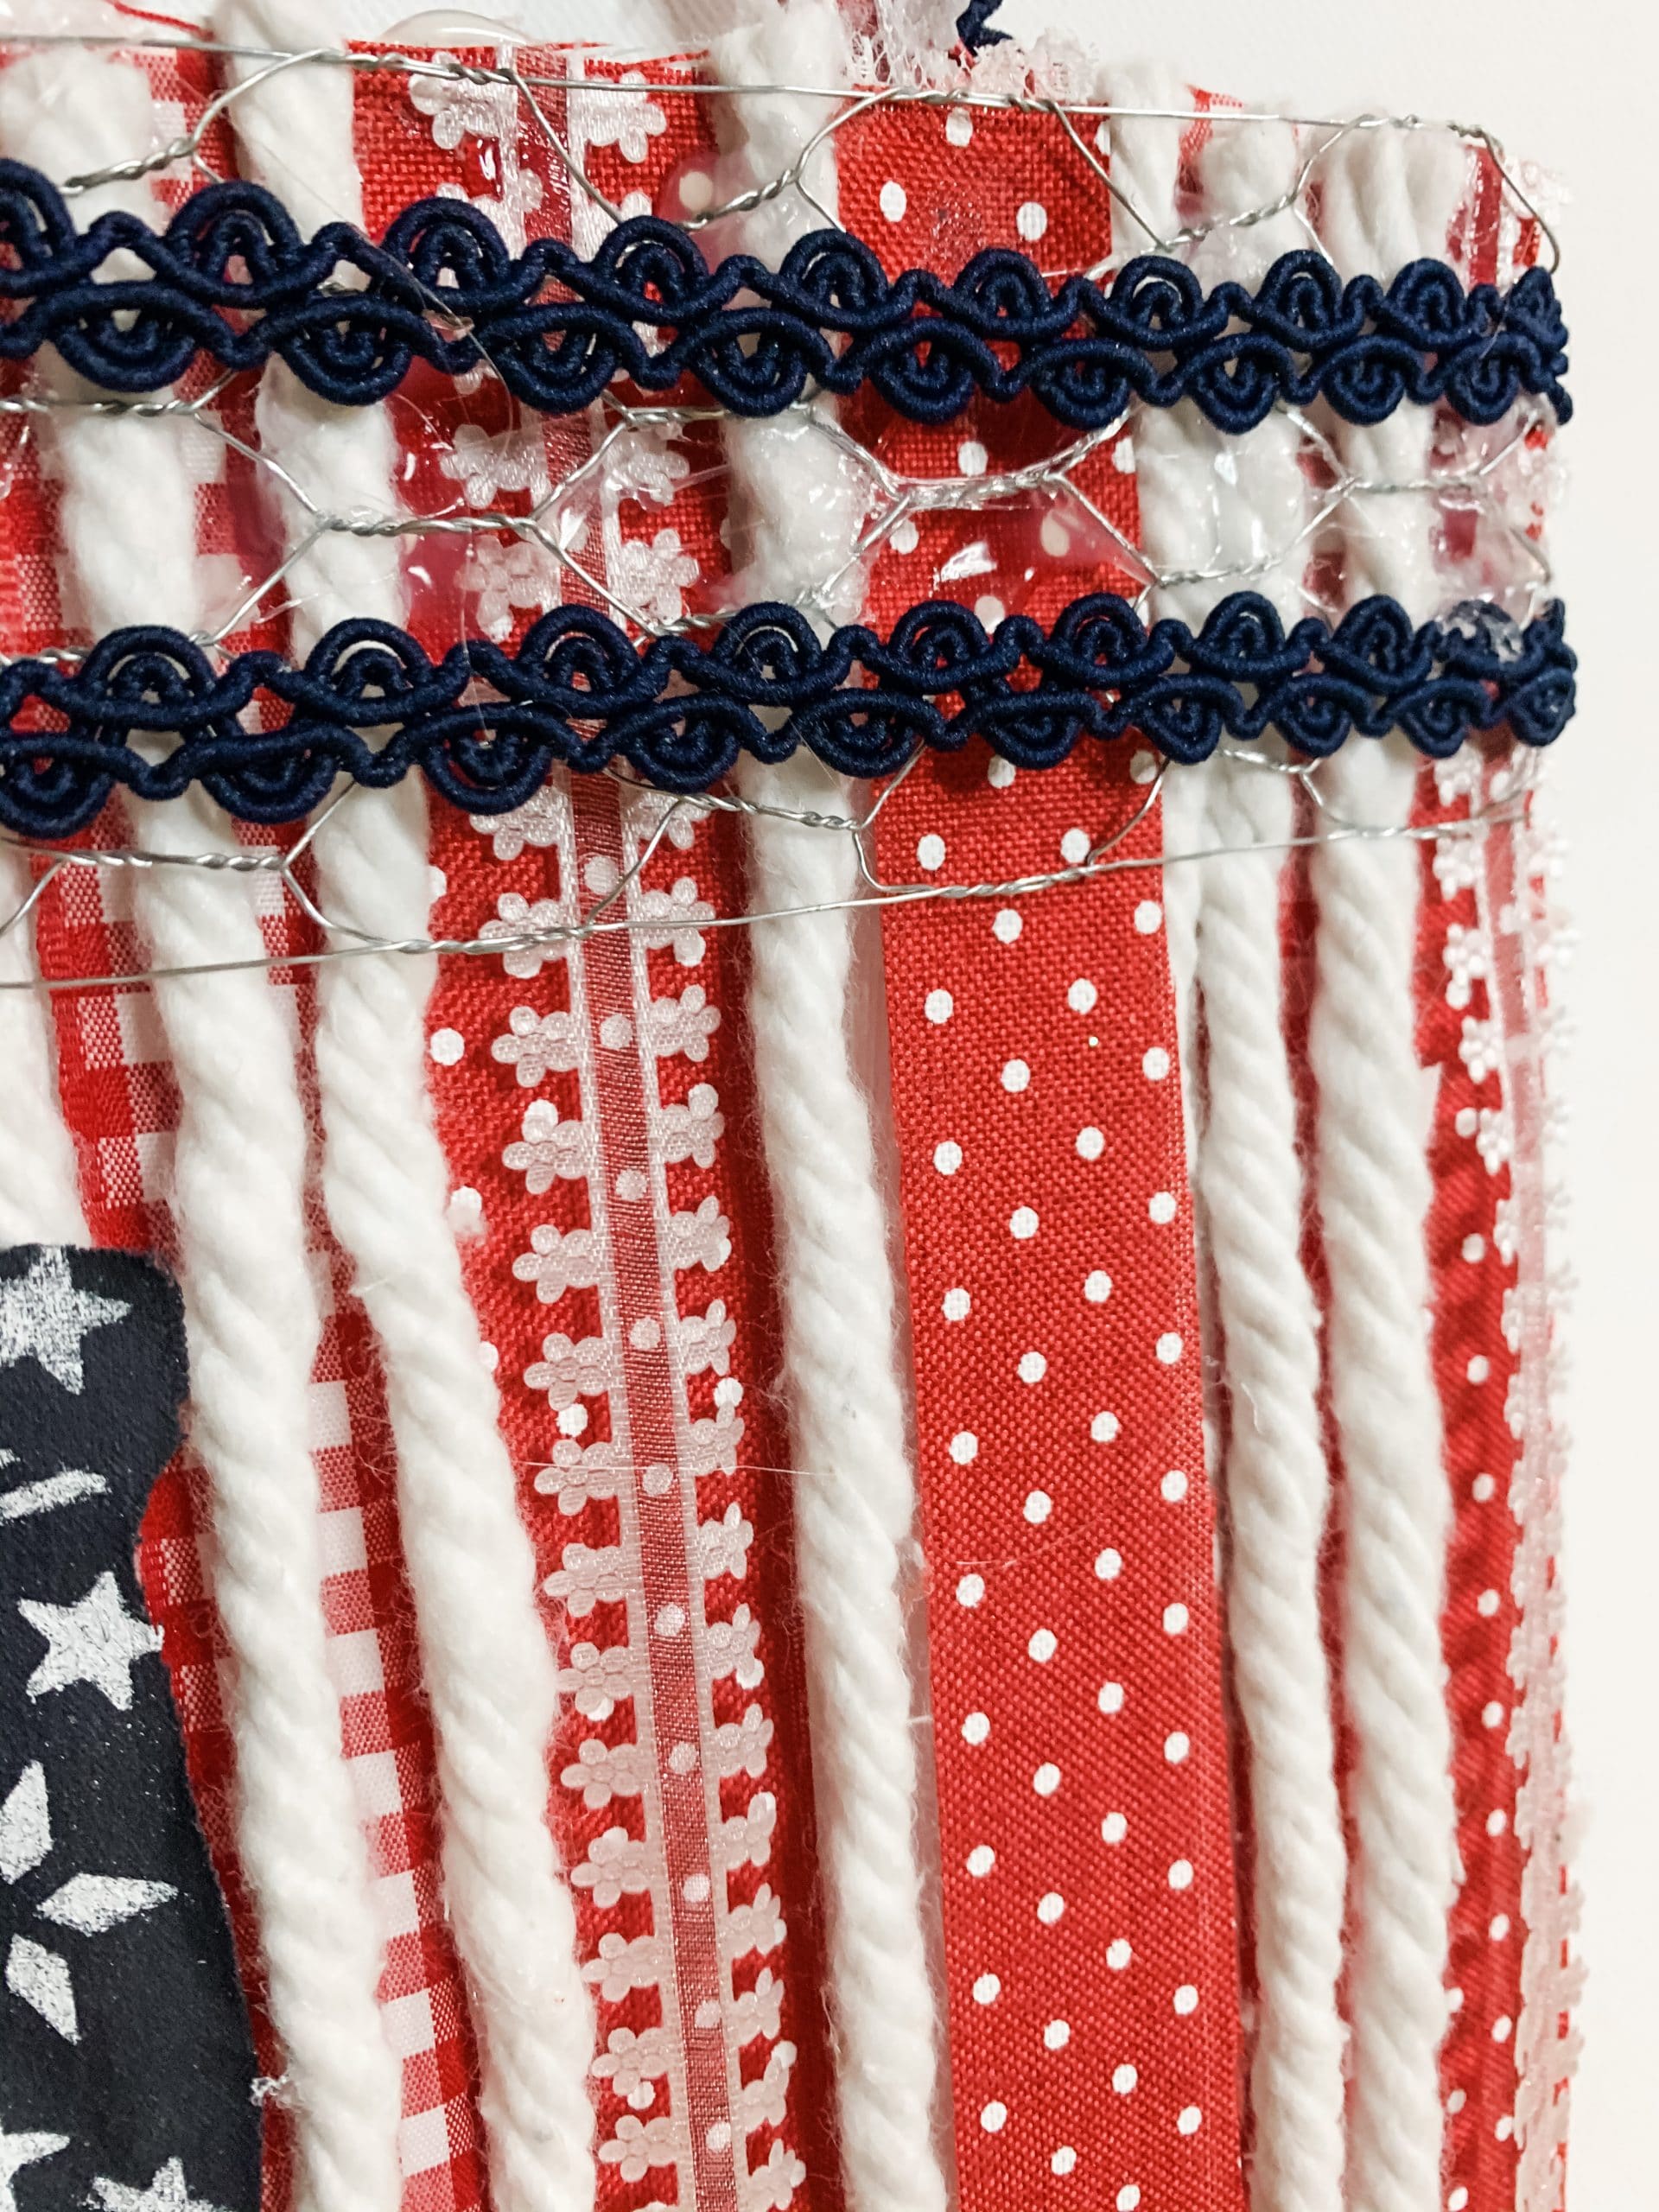 DIY Ribbon American Flag